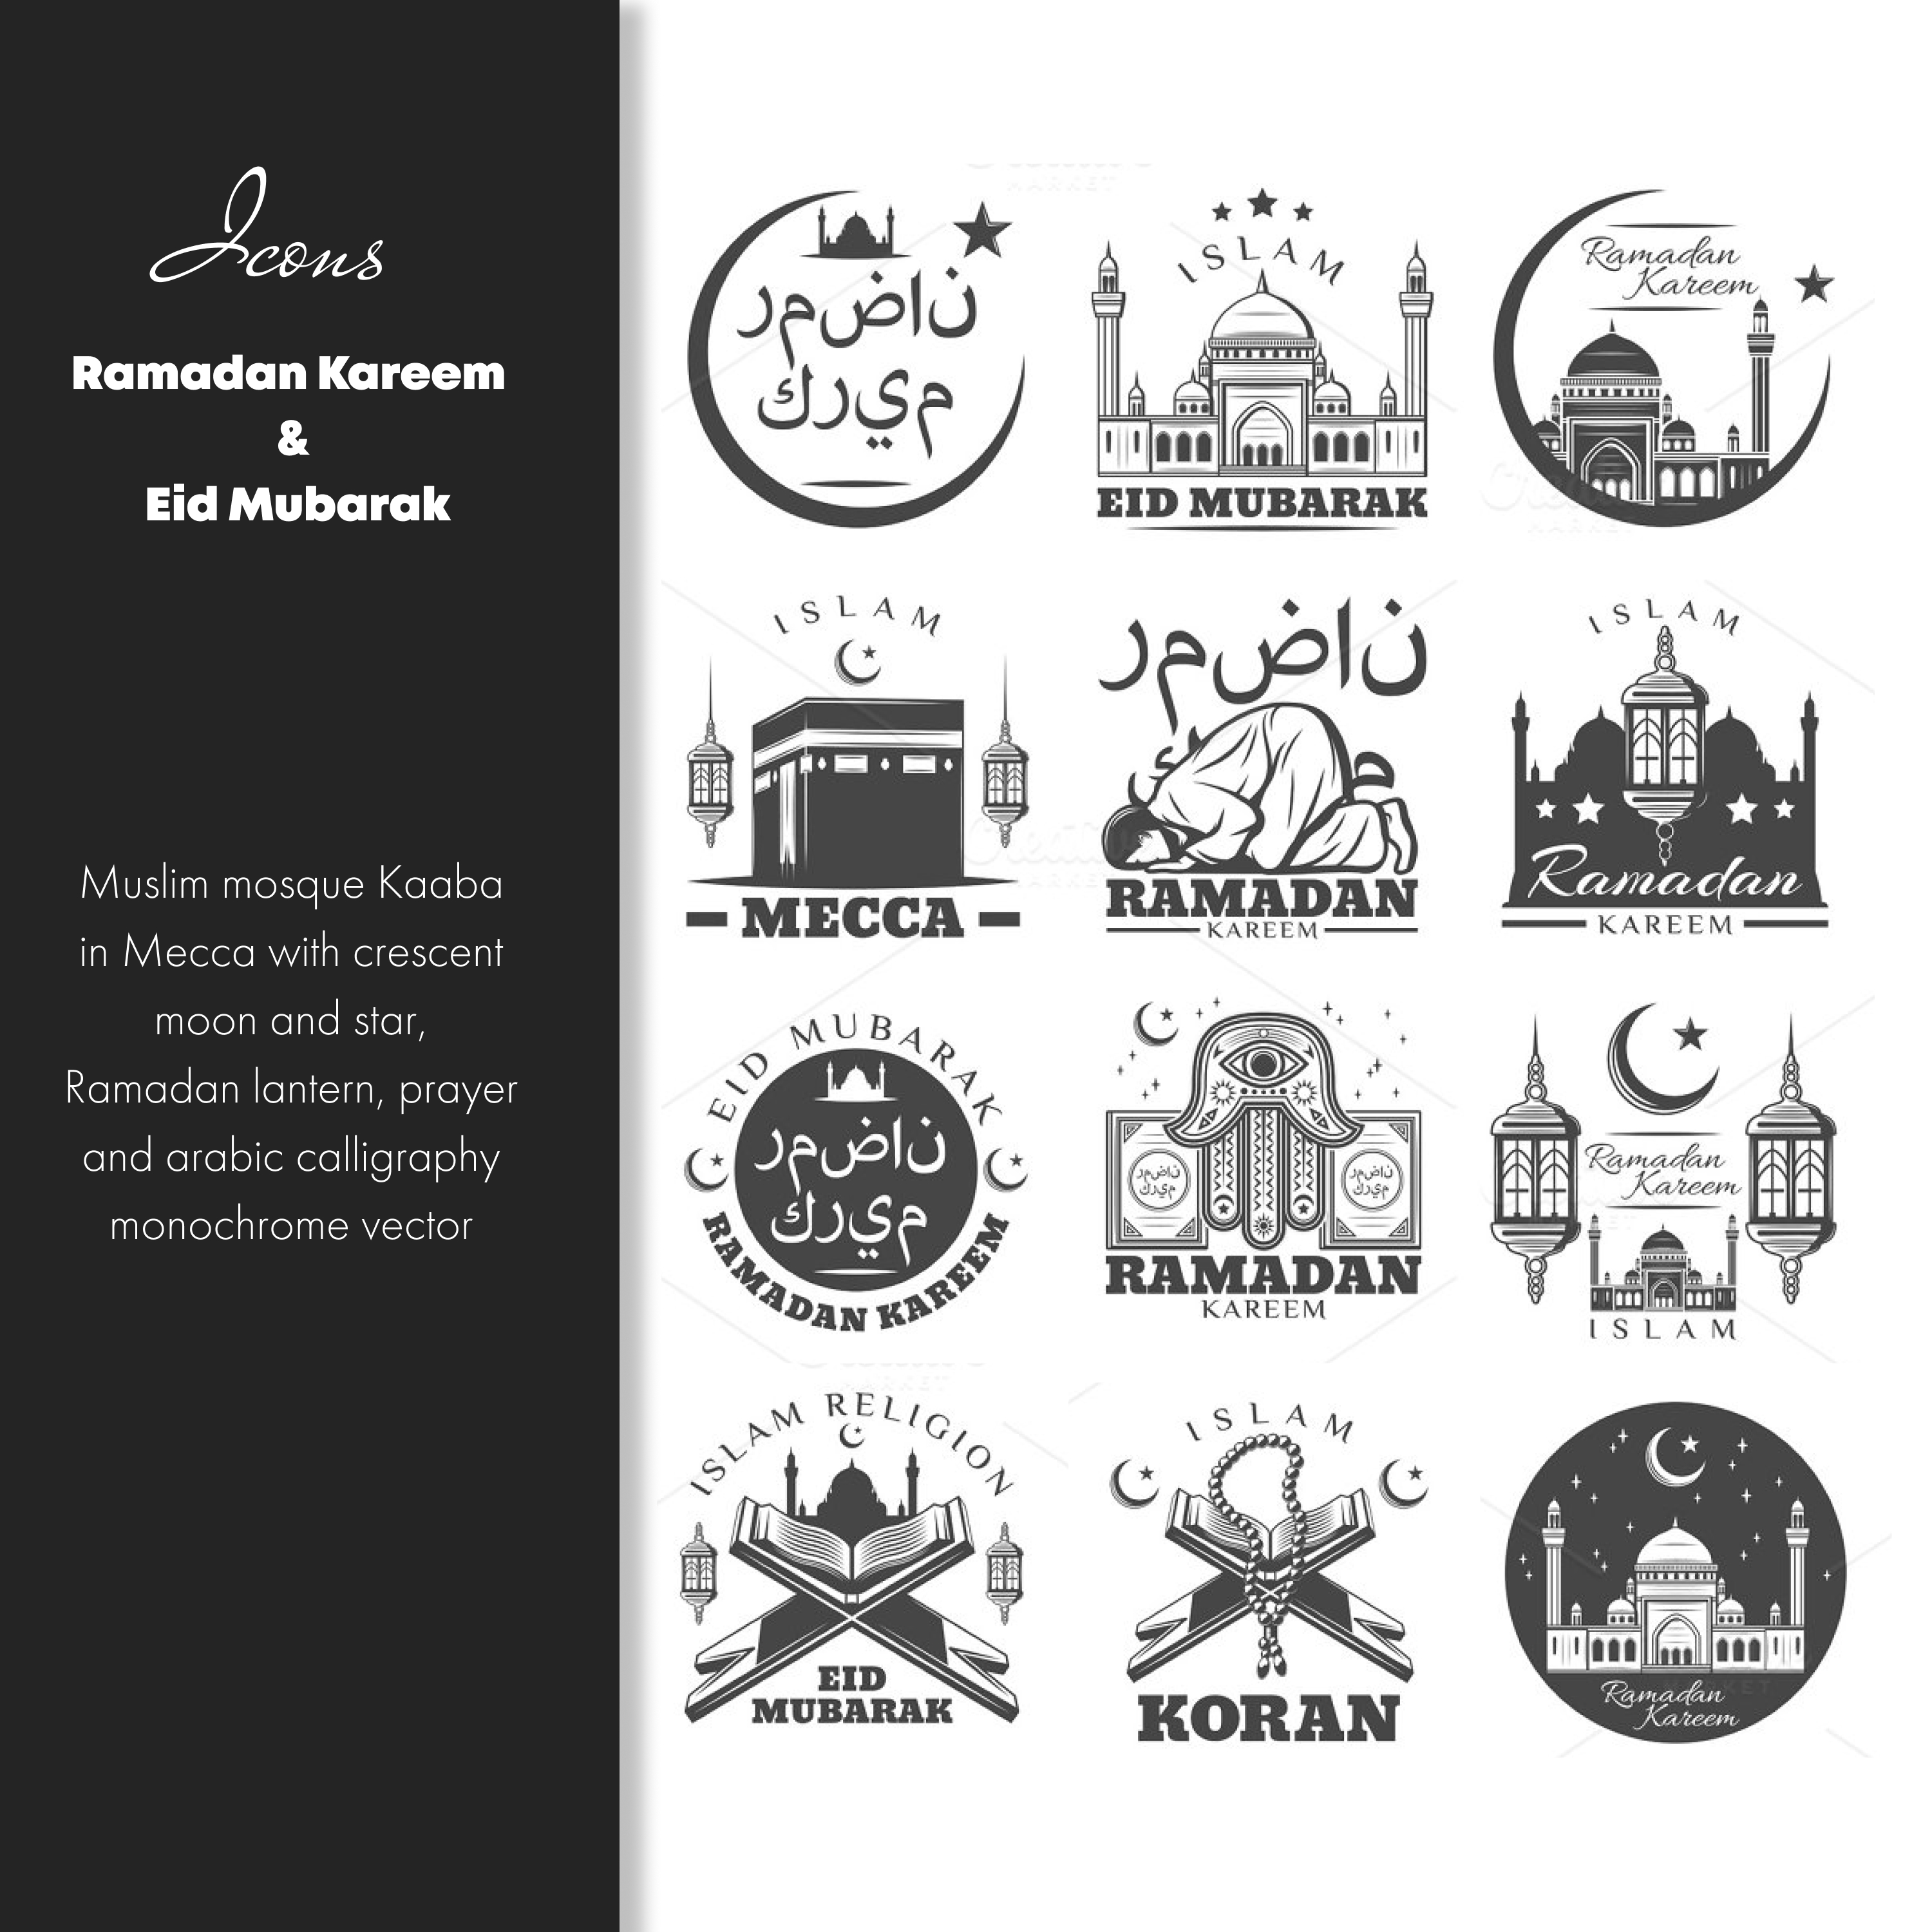 Prints of ramadan kareem and eid mubarak icons.